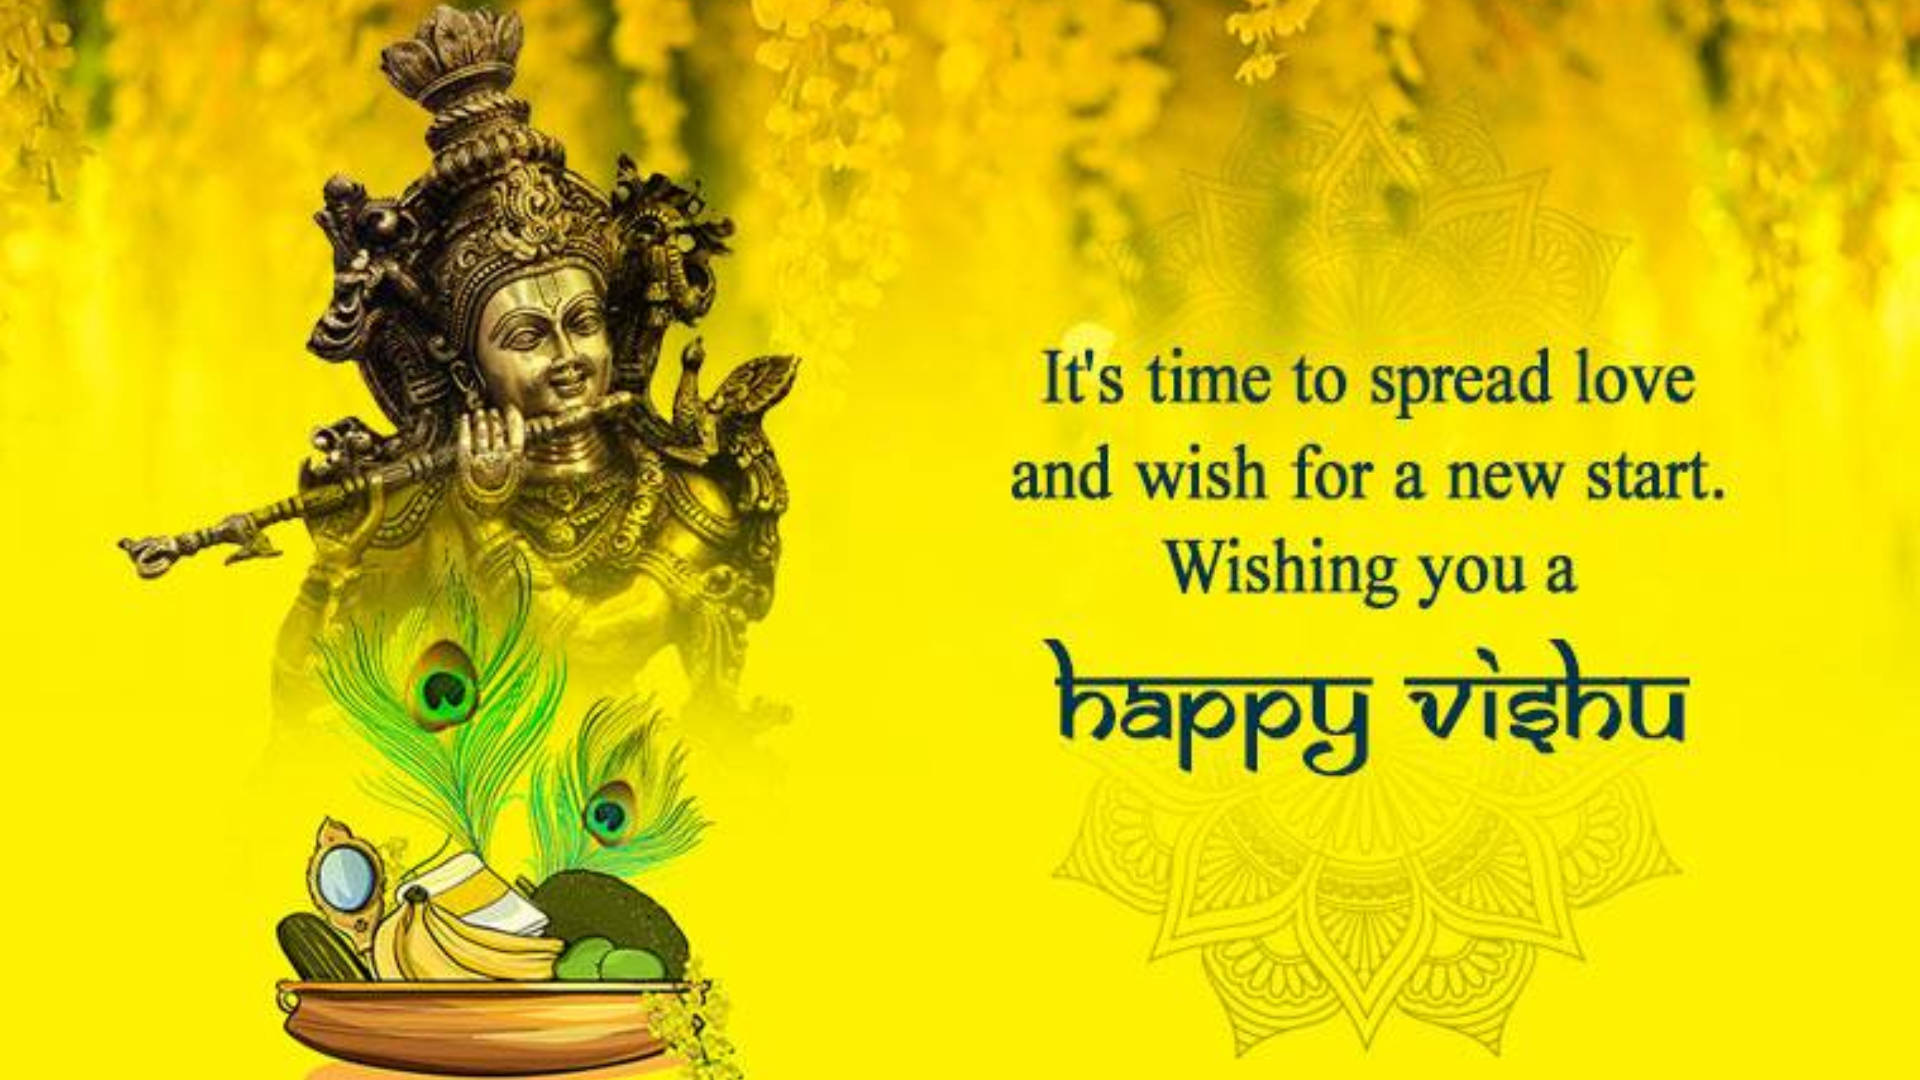 Happy Vishu Kanni Statue Spread Love Wallpaper